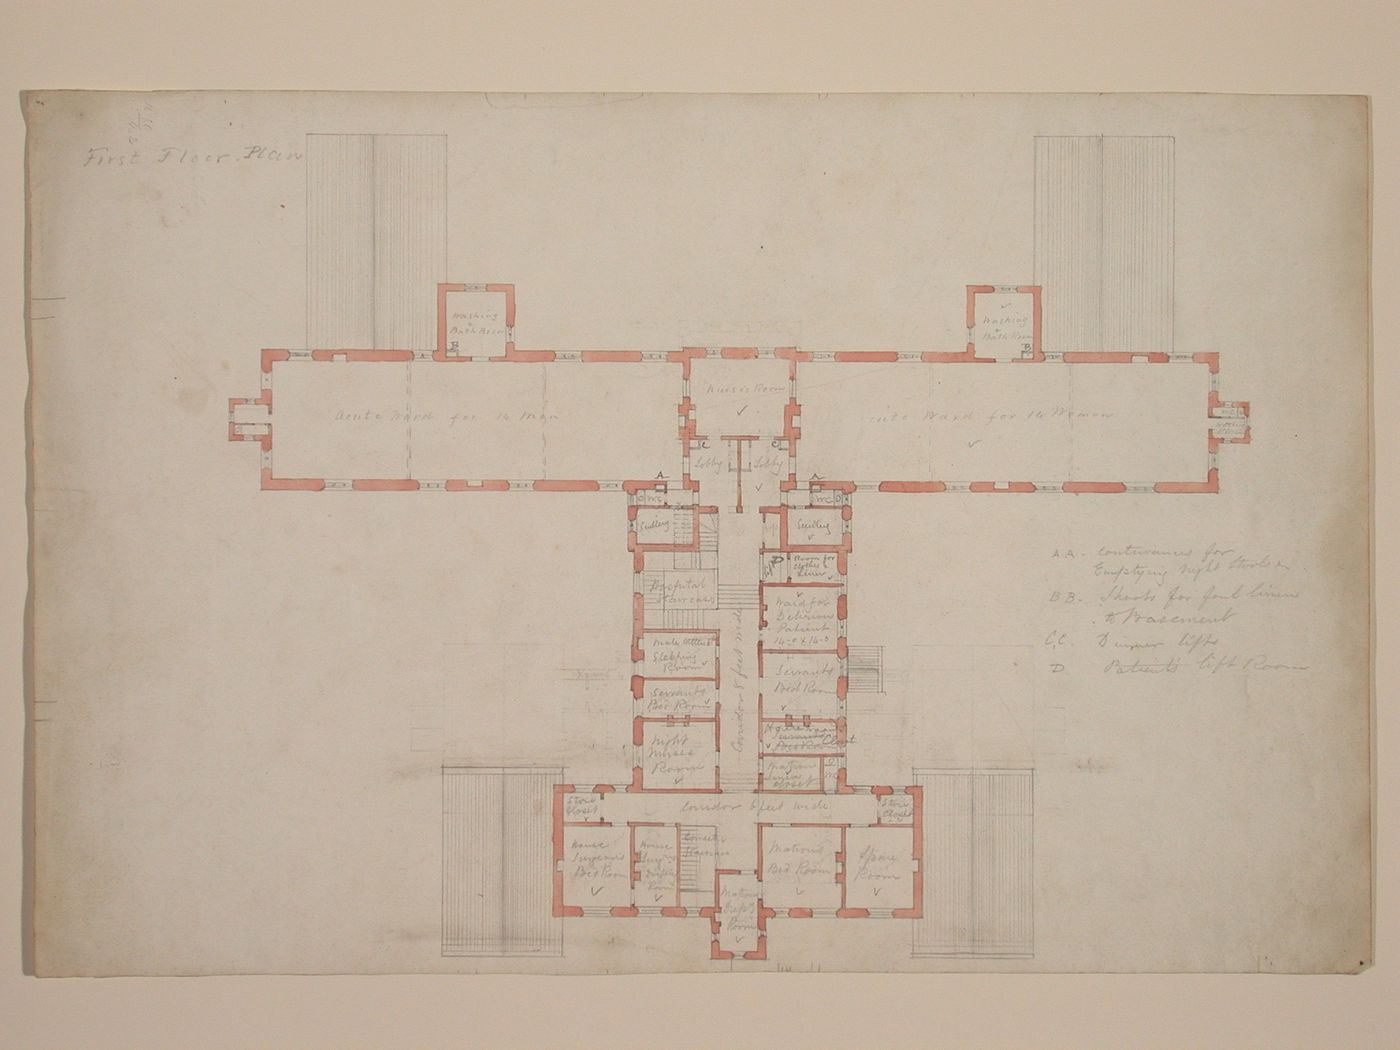 First floor plan of a hospital